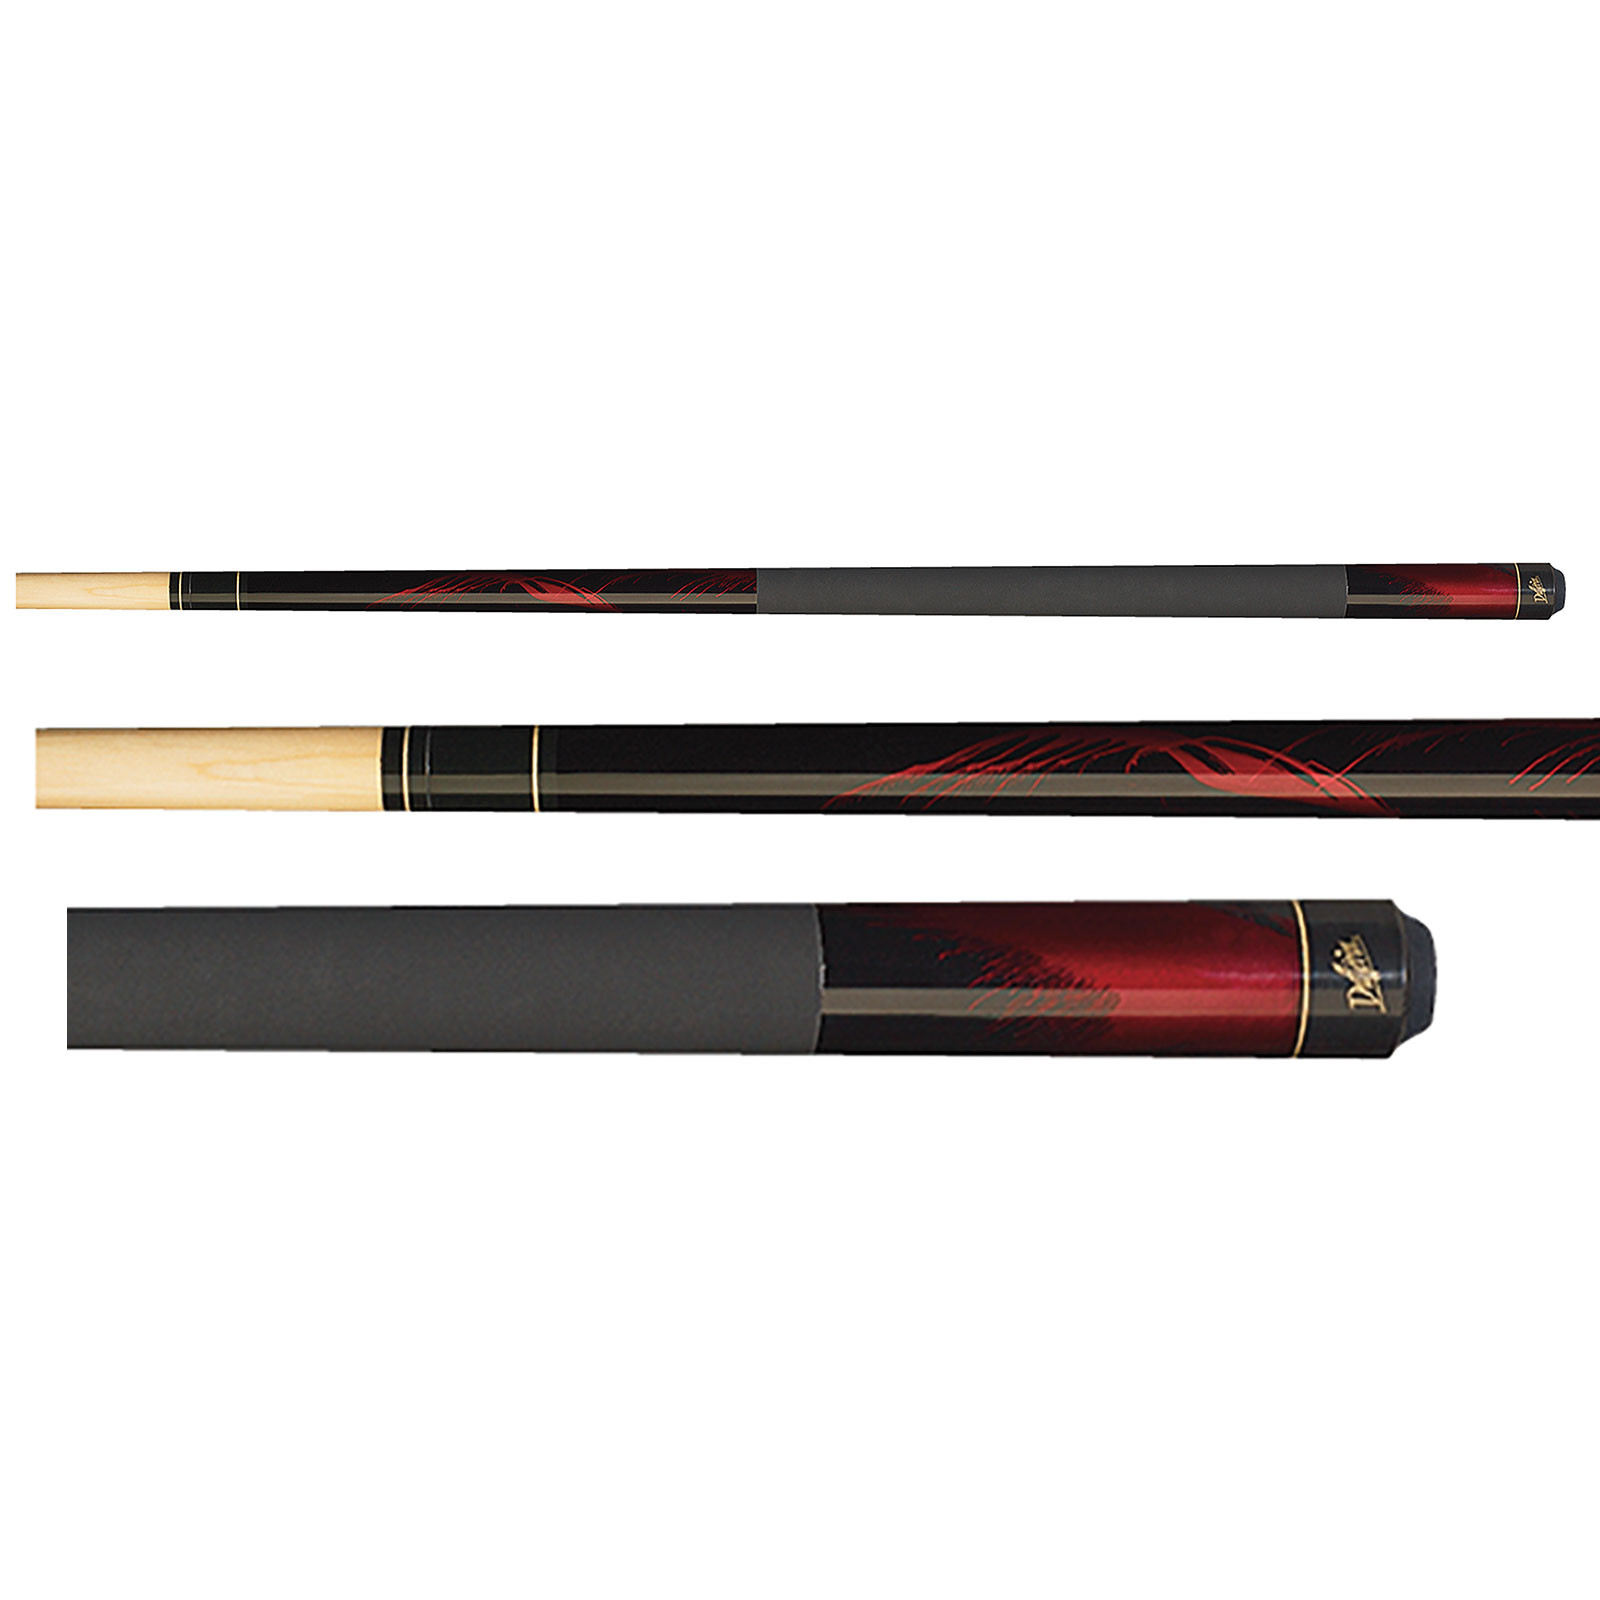 Dufferin D-212 Red Flame Pool Cue Stick